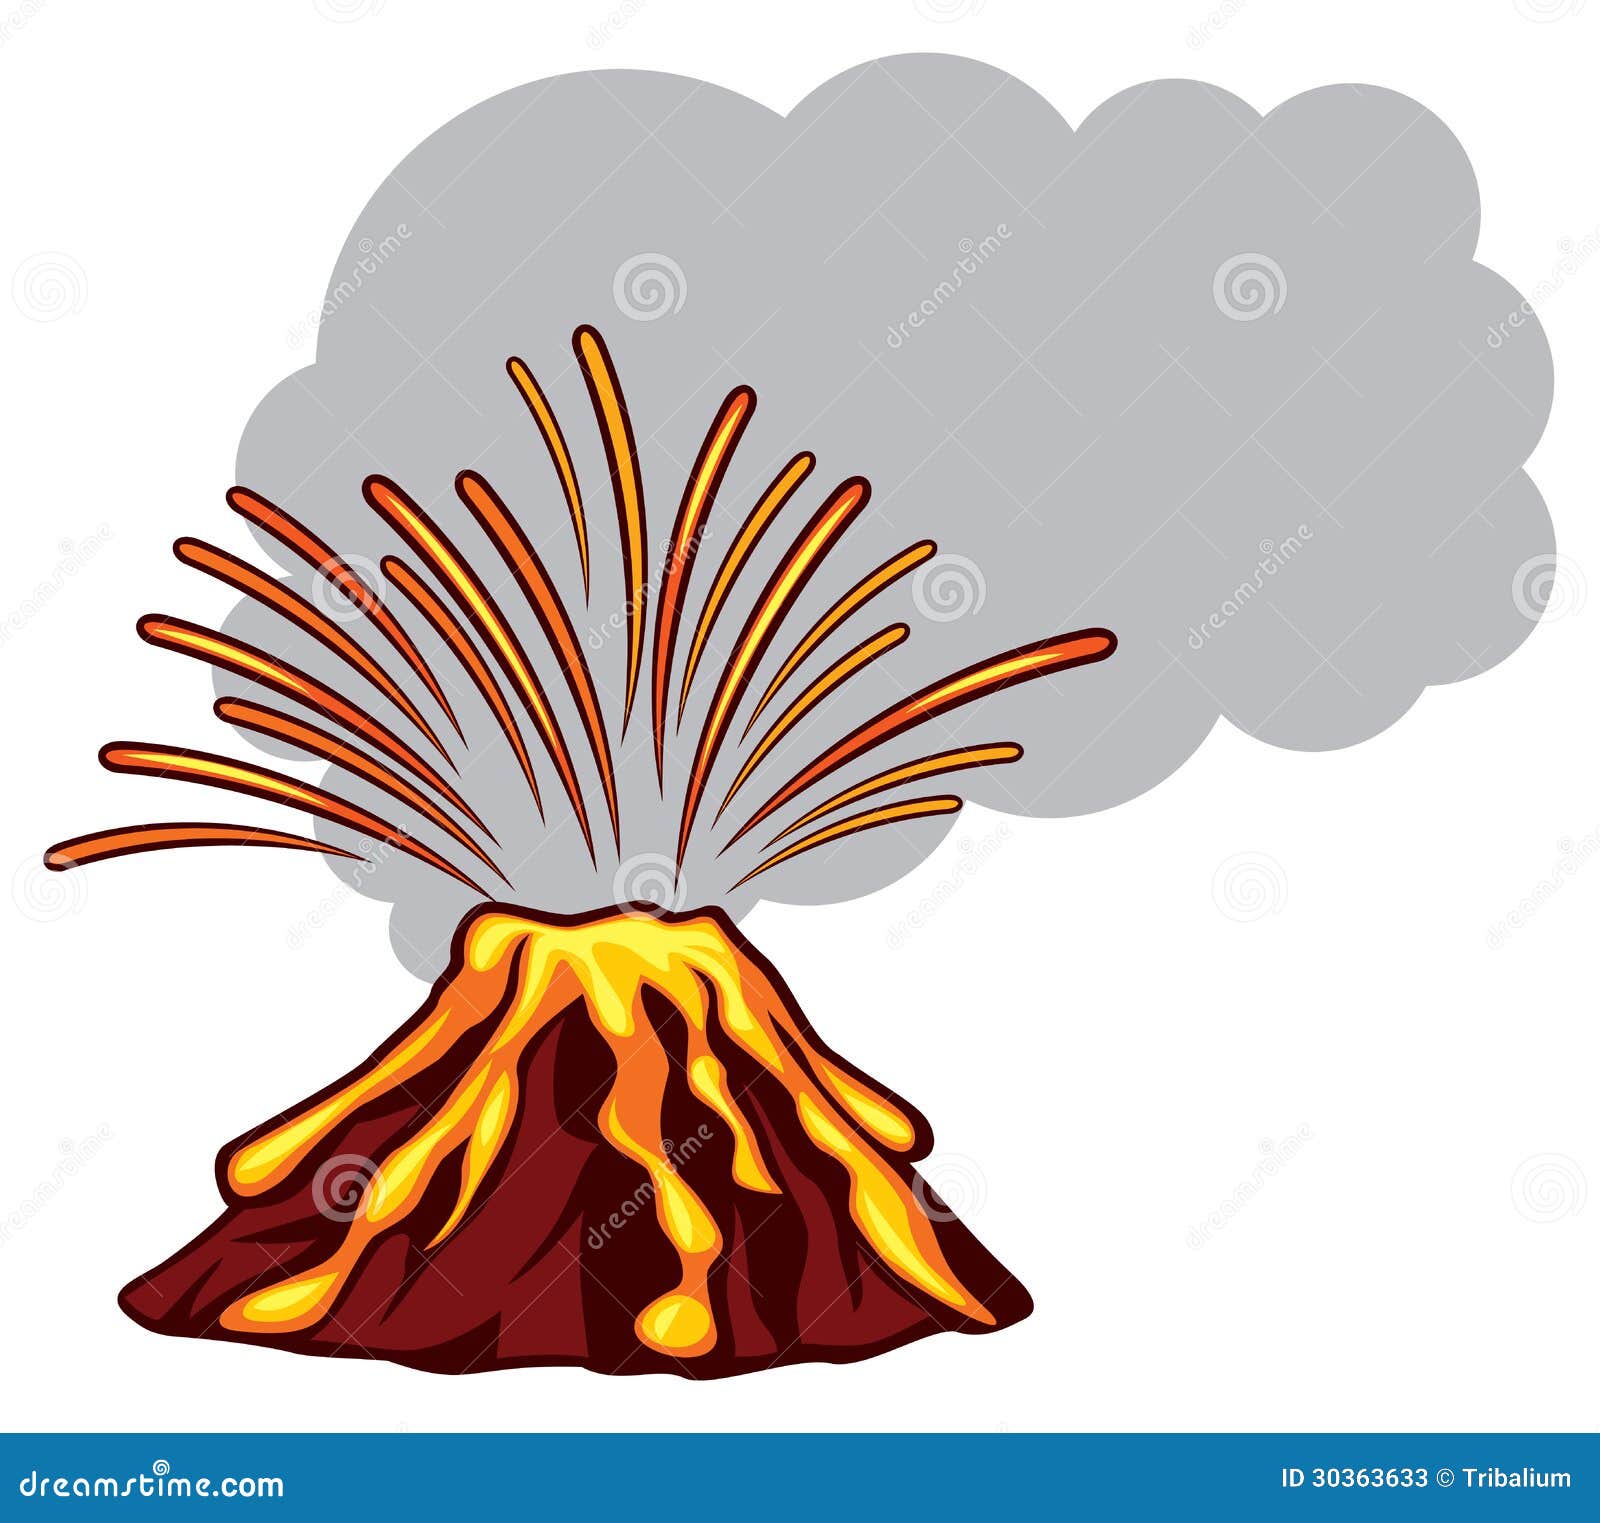 clipart volcano erupting - photo #43